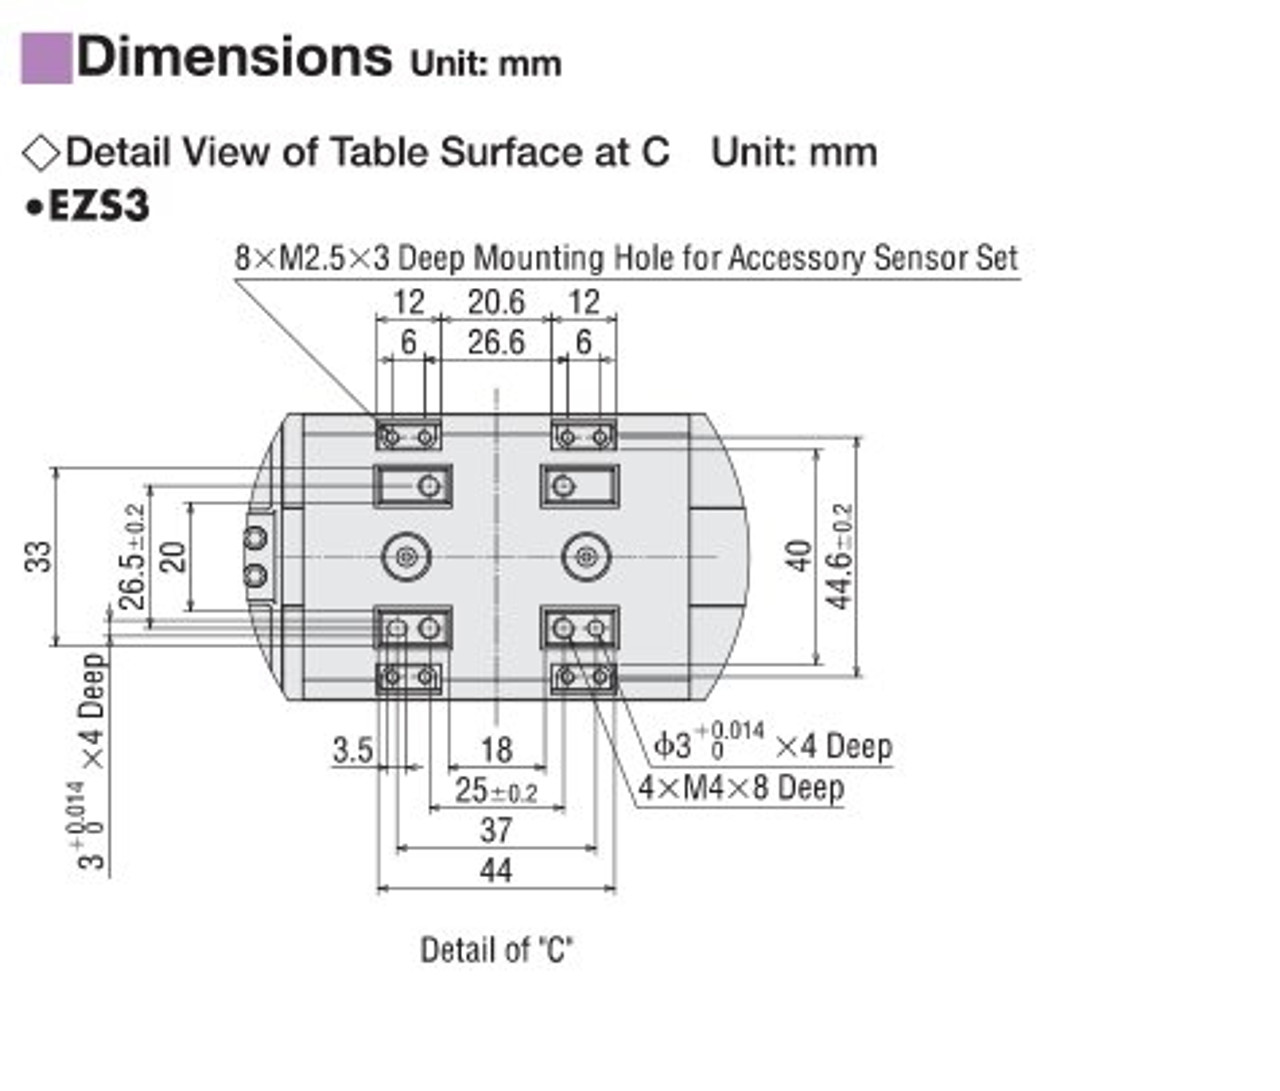 EZSM3RD010AZMC - Dimensions